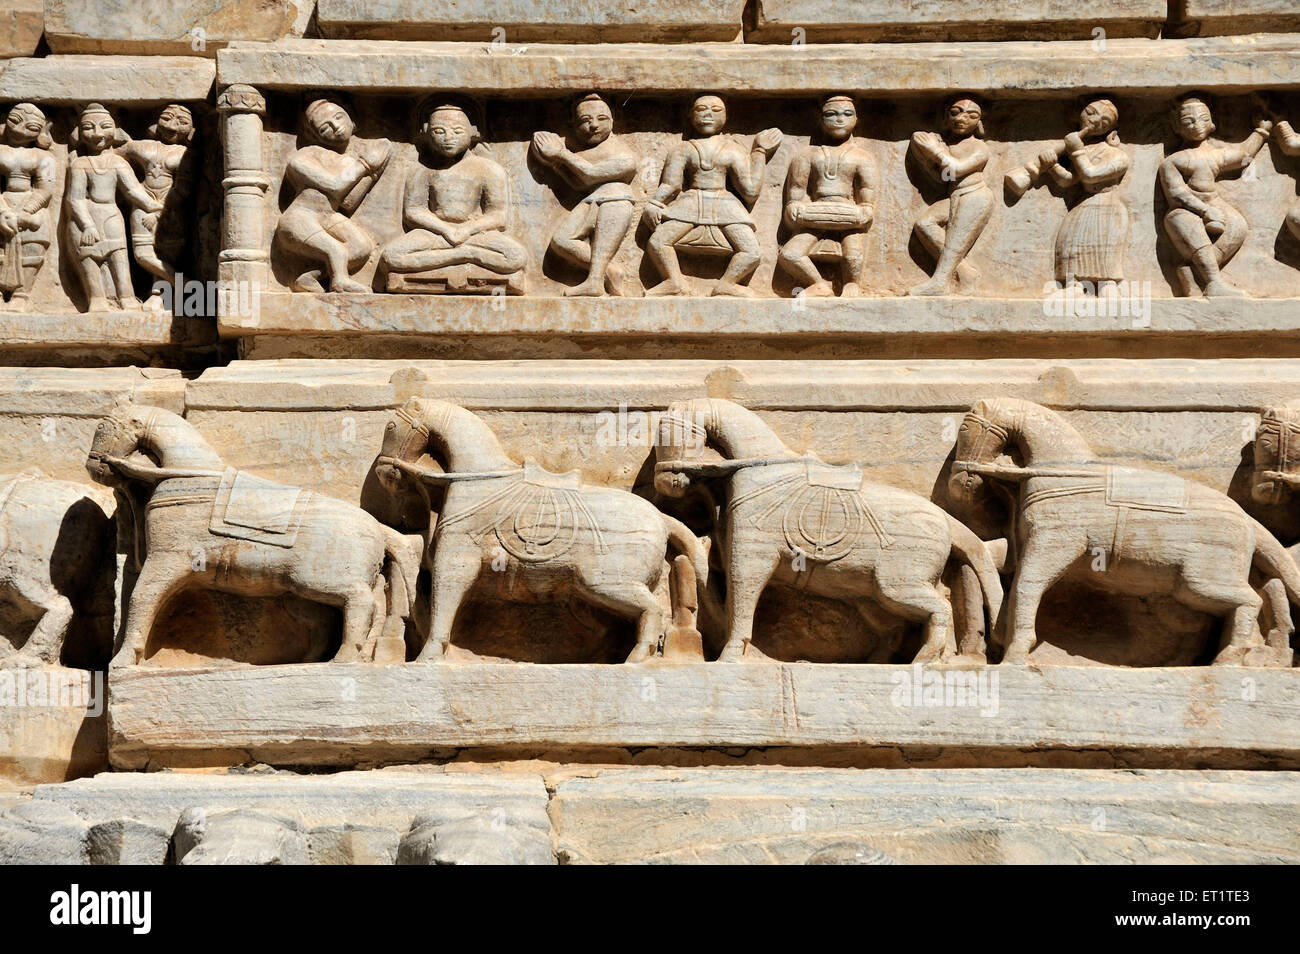 Dancing figures and horses, Jagdish Temple, Vishnu temples, Udaipur, Rajasthan, India, Asia Stock Photo